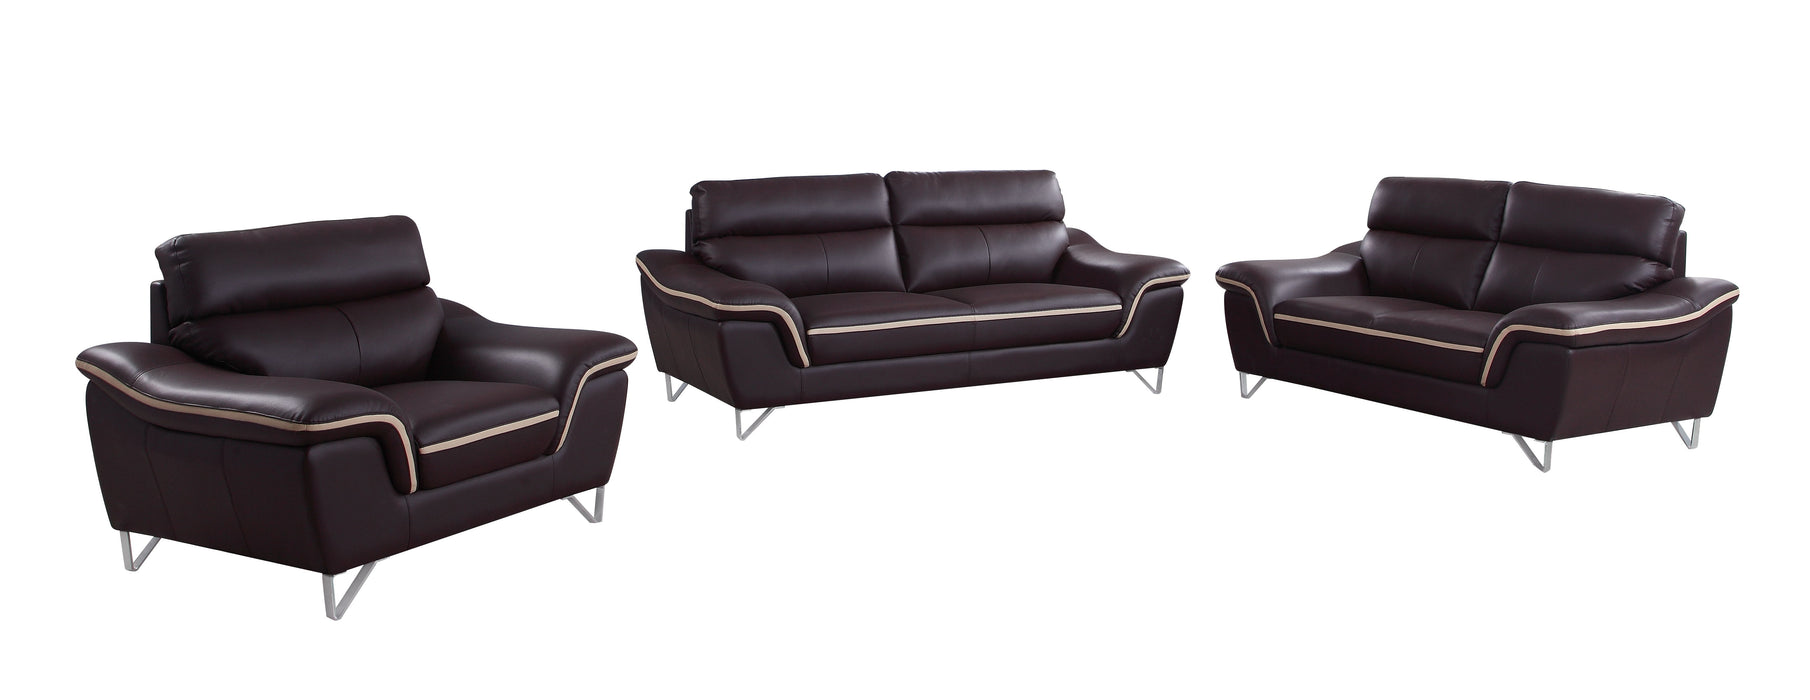 168 - Sofa Set